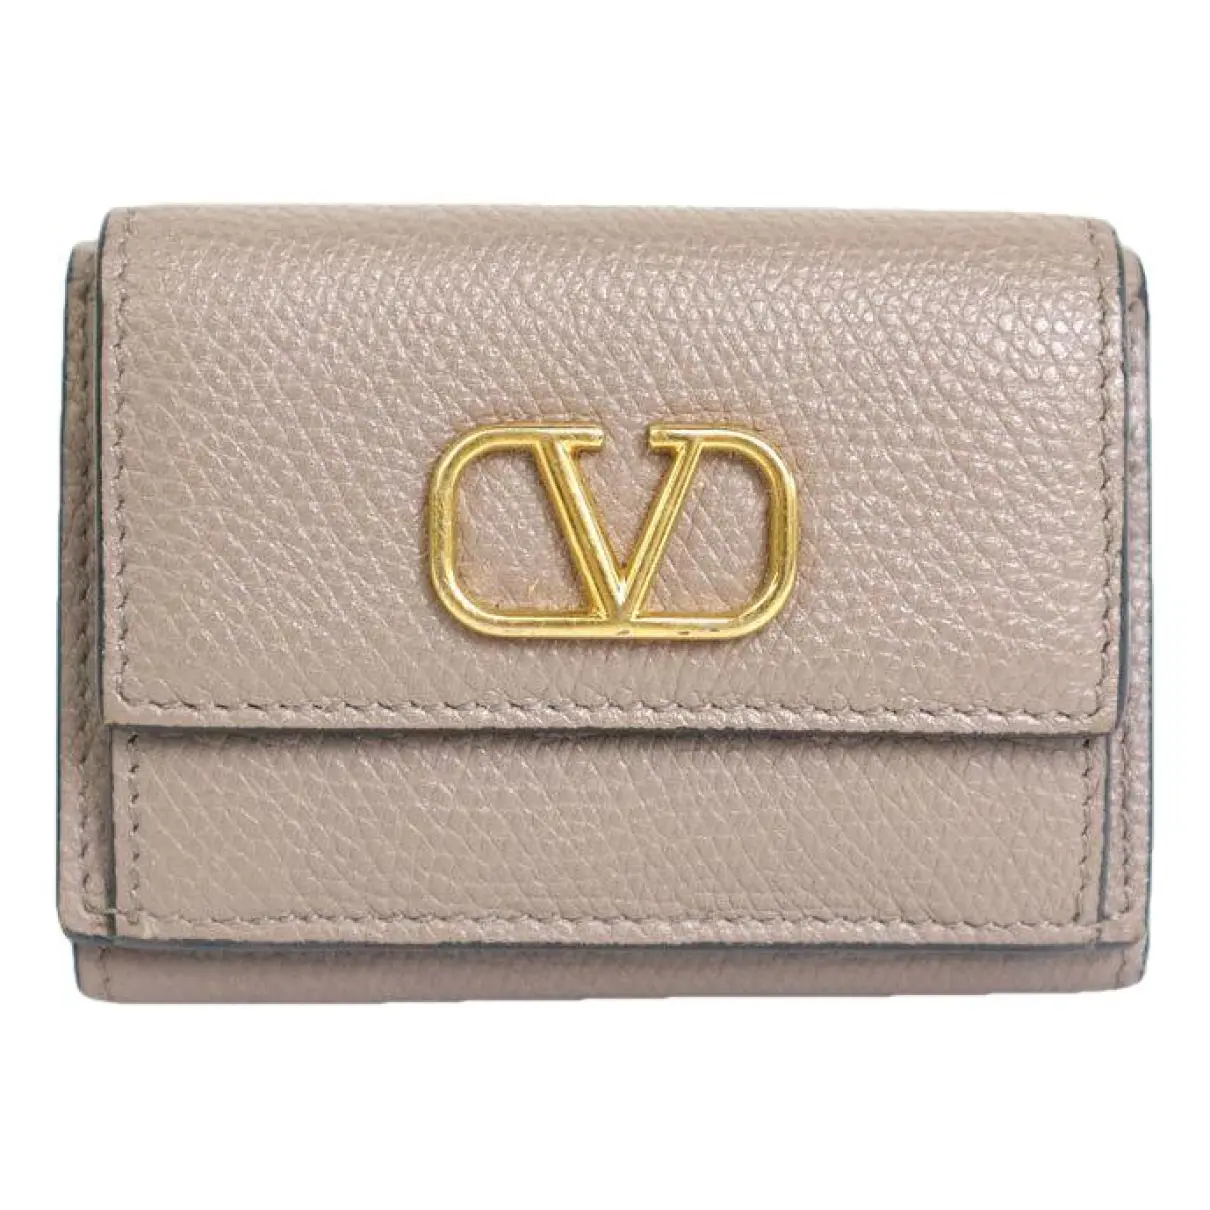 VLogo leather wallet